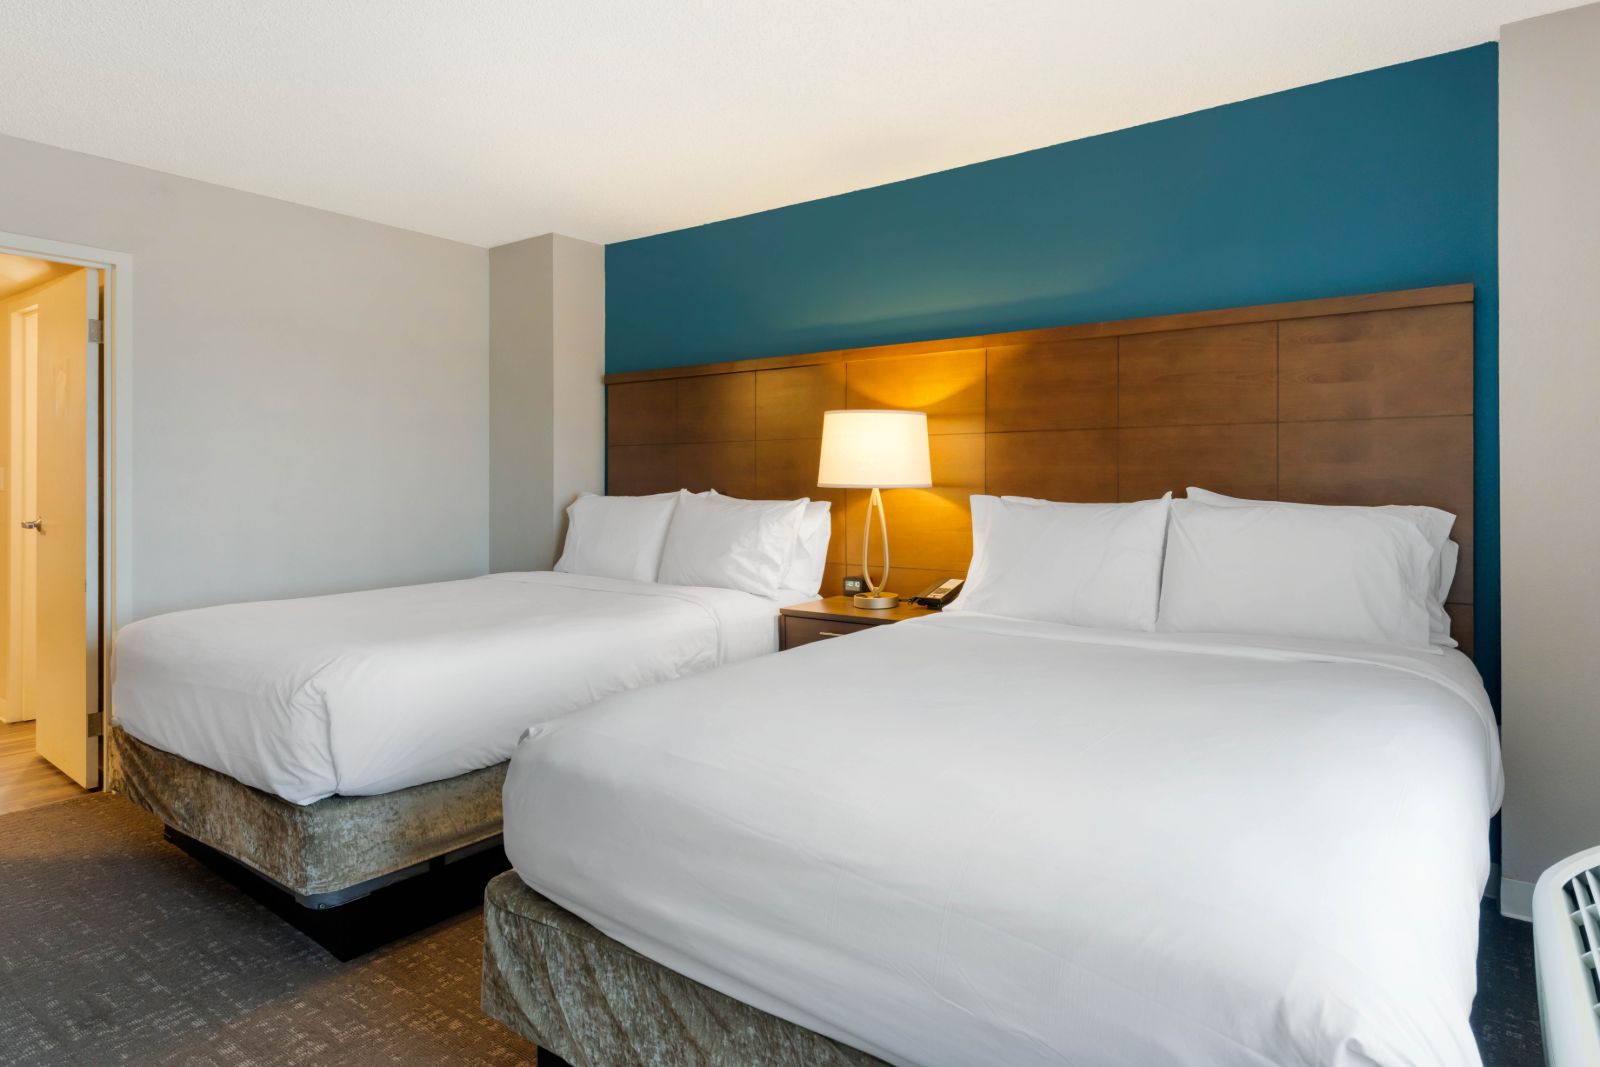 Orlando One bedroom suites near Disney World